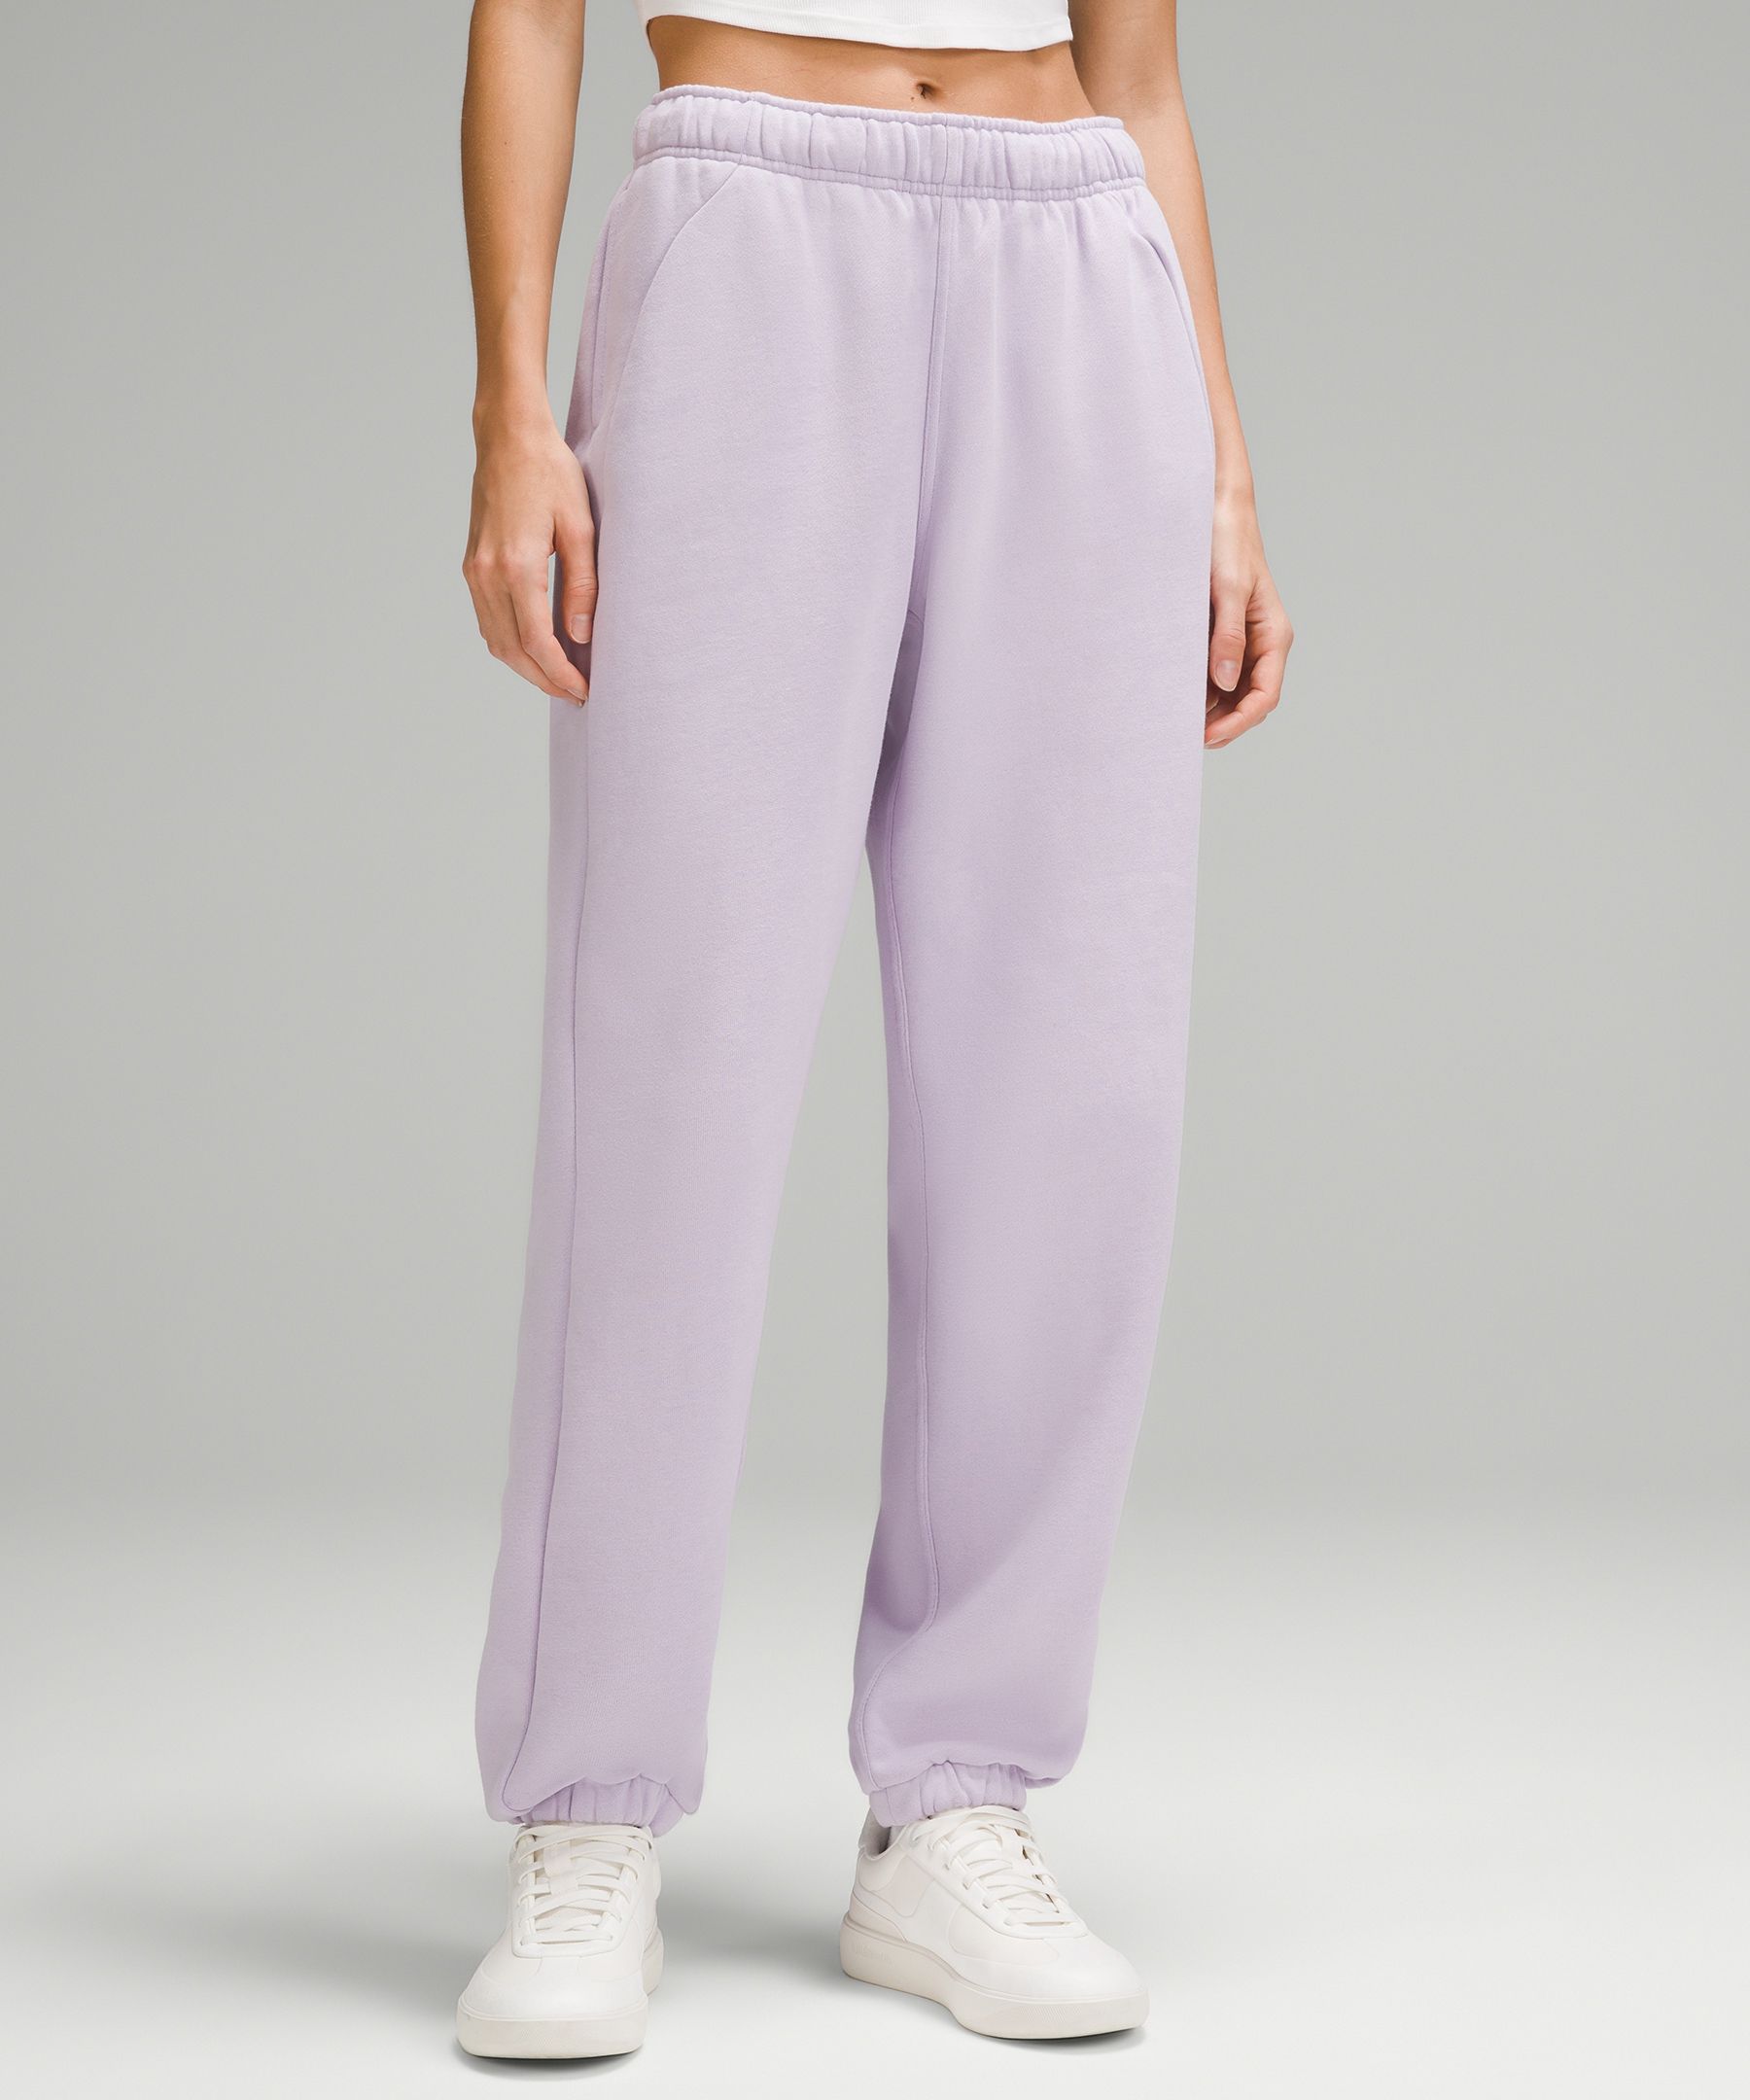 Lululemon 8 Purple Bra Size M - $58 (14% Off Retail) - From Cheryl